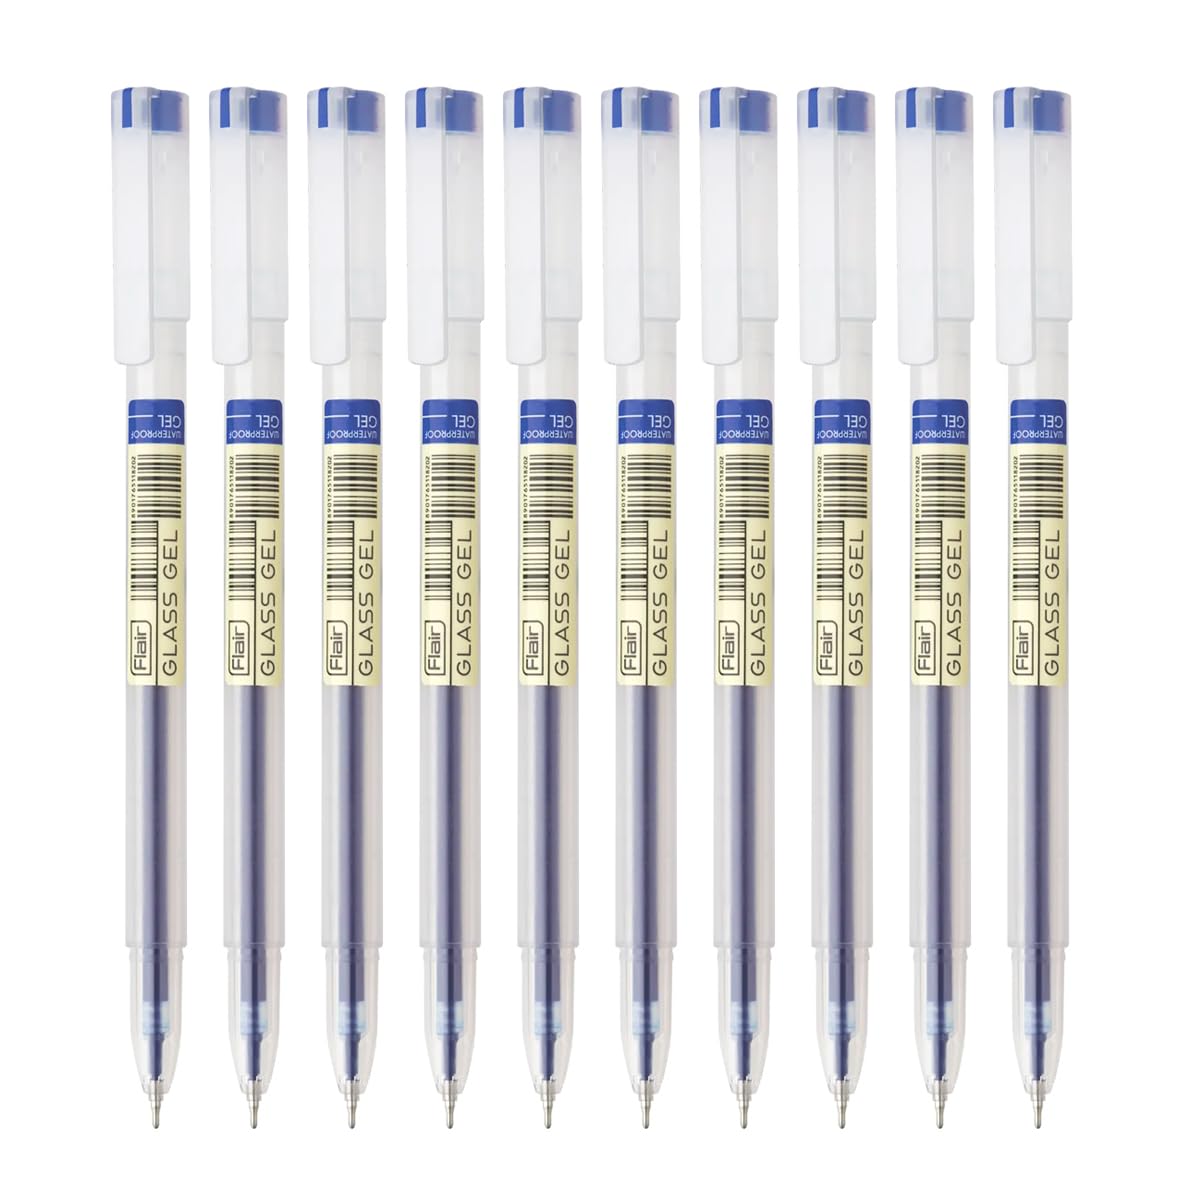 Flair Glass Gel Pen Wallet Pack - 0.6mm - Blue Ink